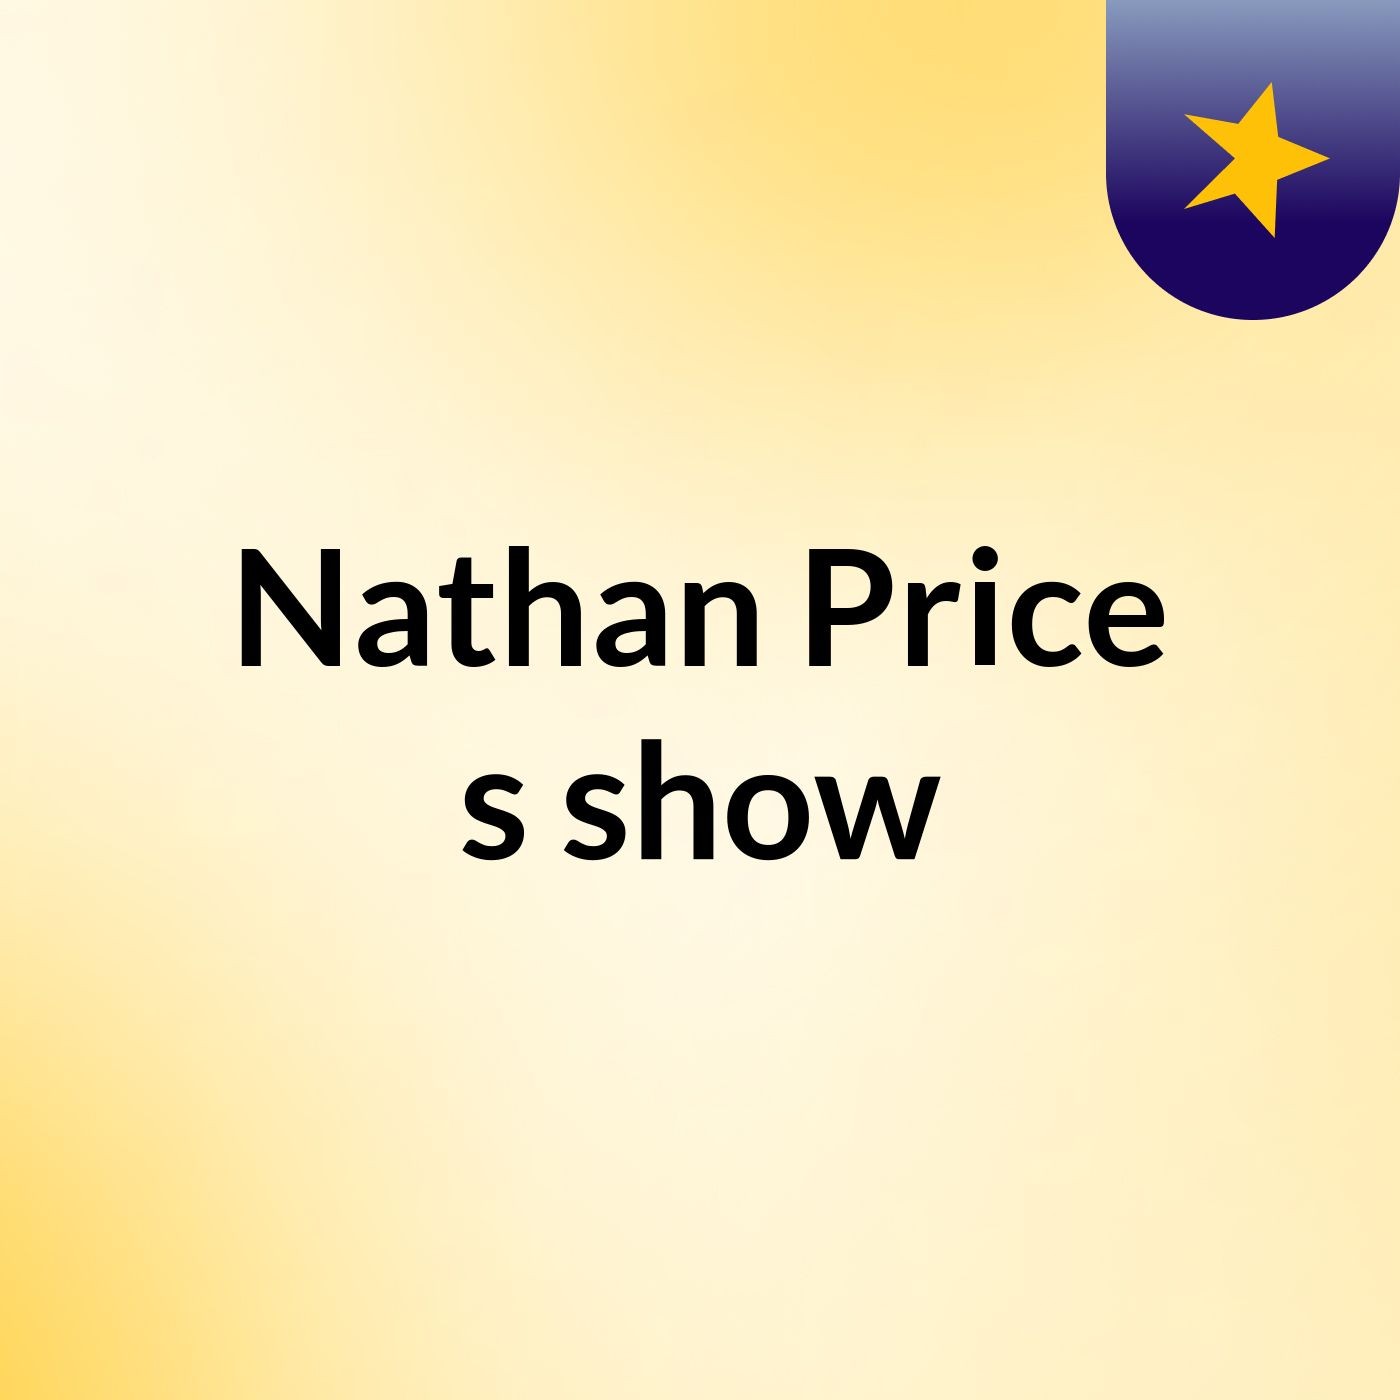 Nathan Price's show